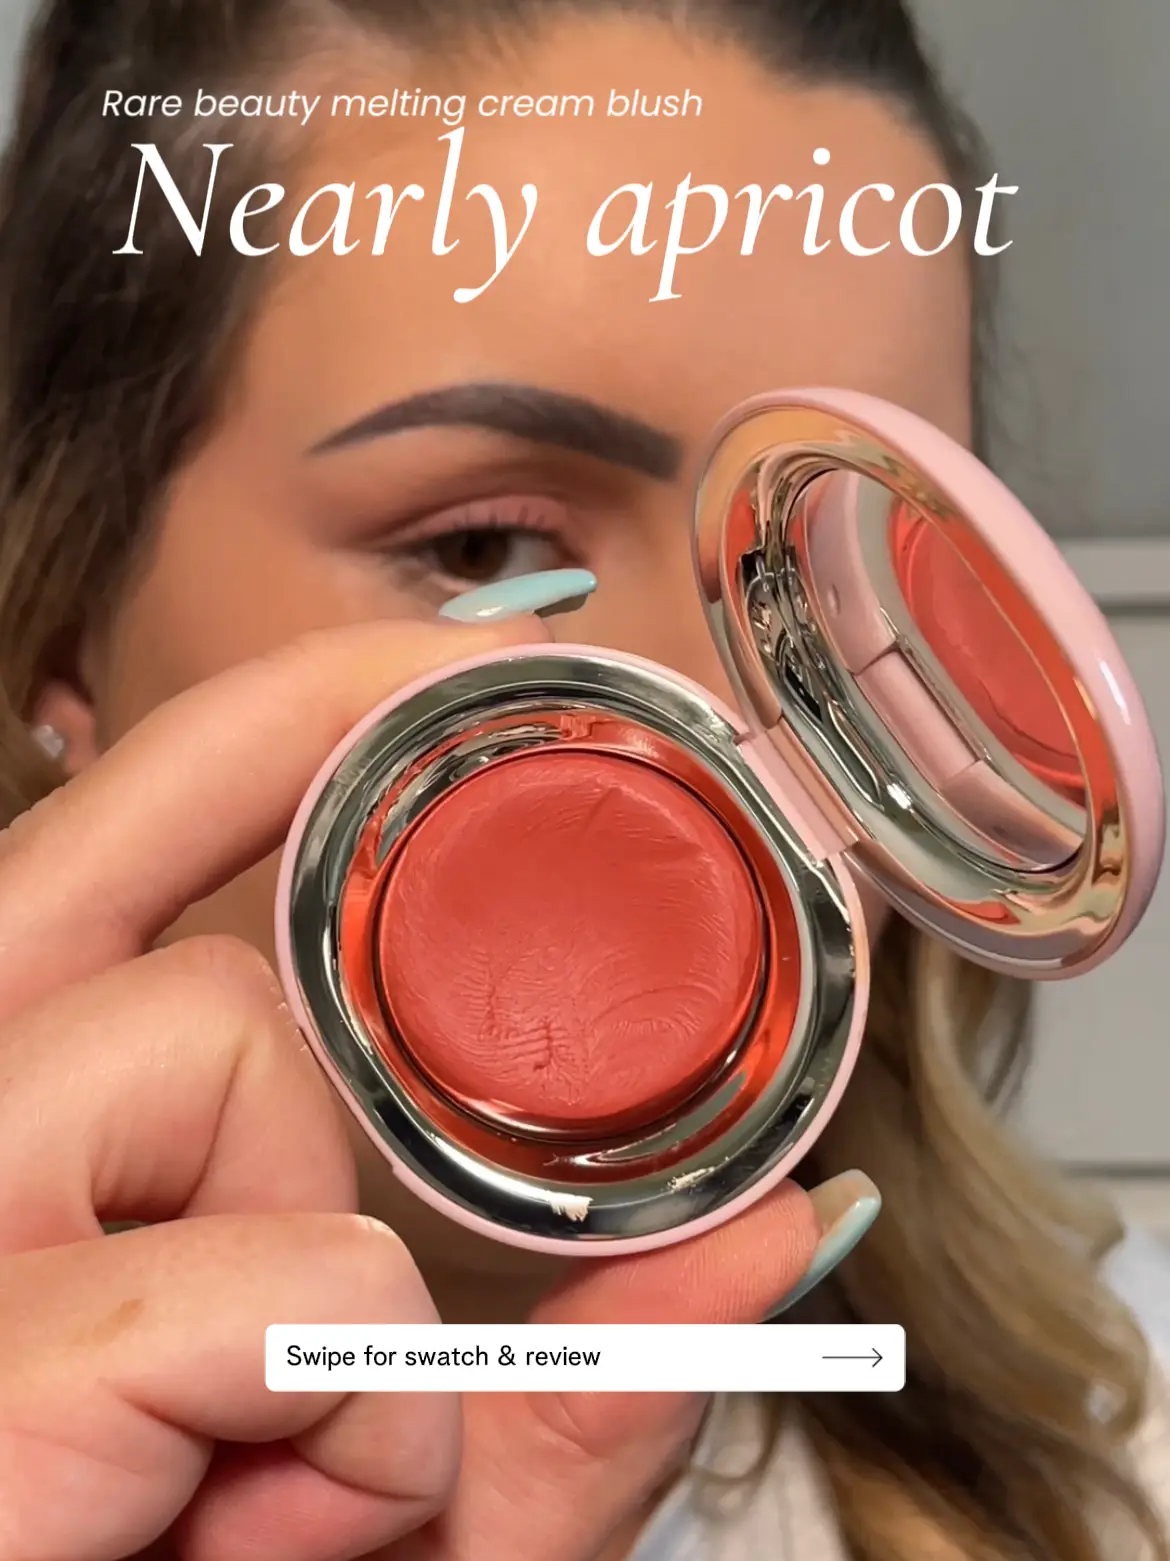 Rare beauty Nearly apricot melting blush review ✨